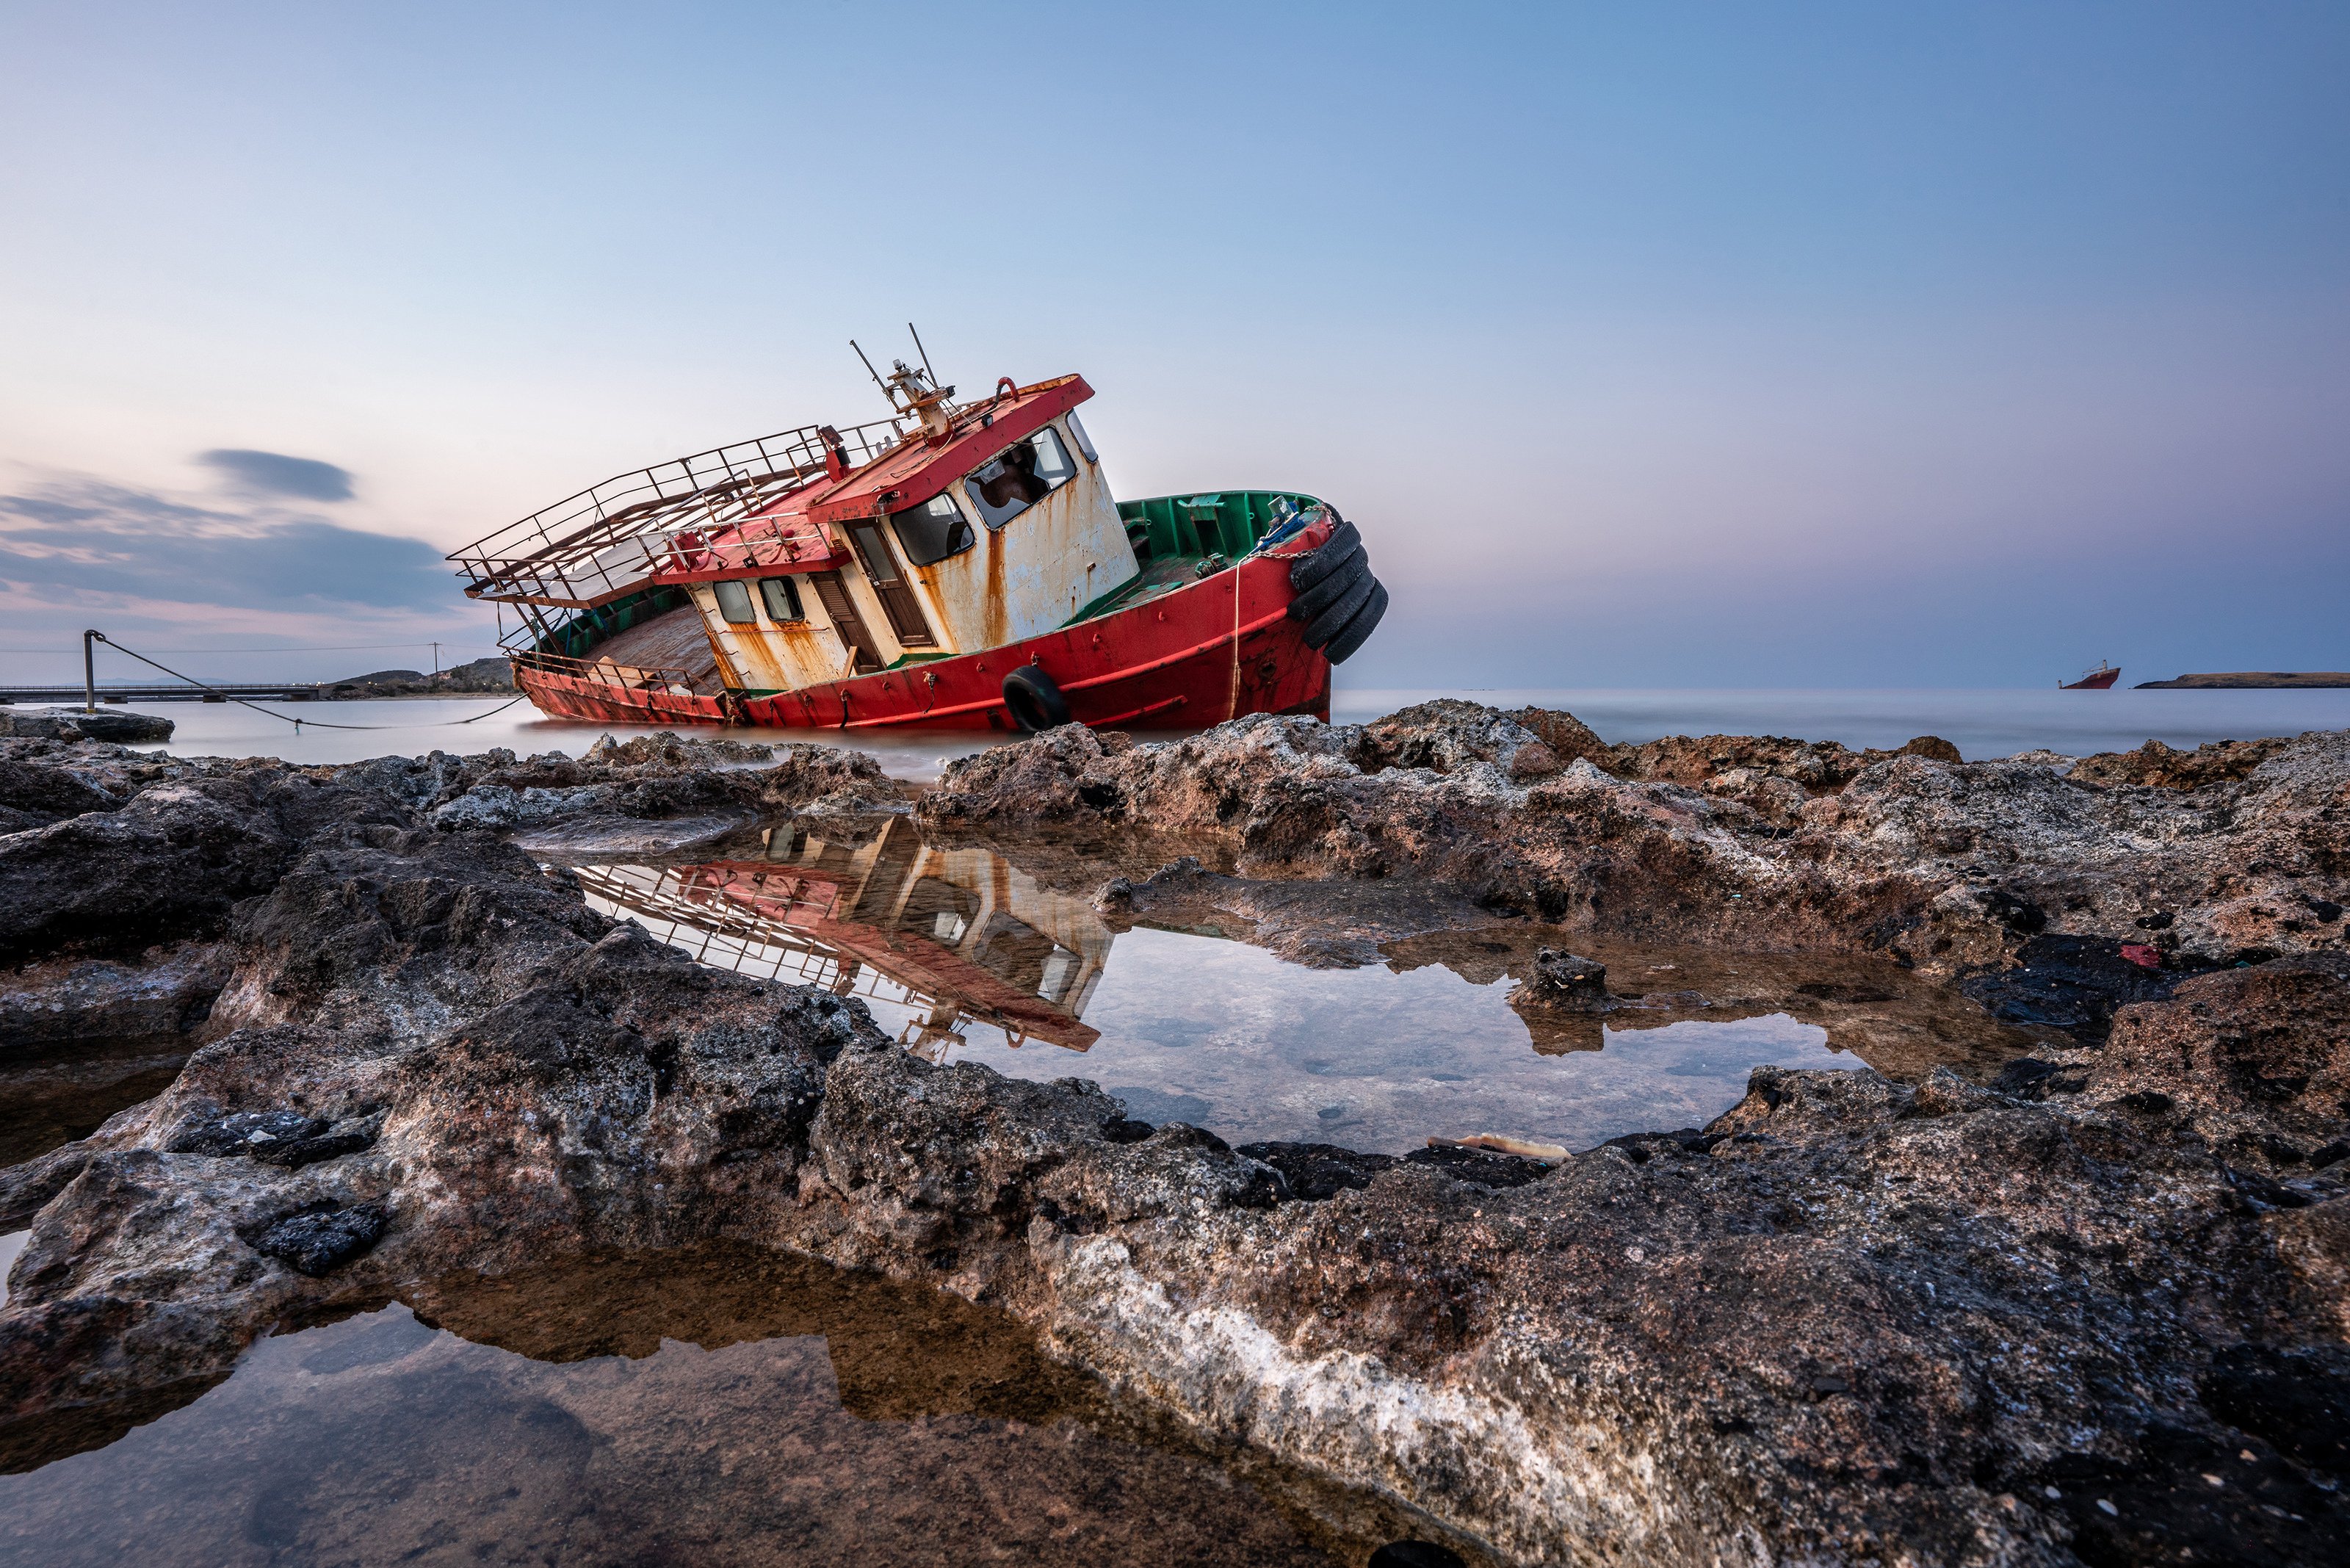 Greece; Kithera; Kithira; blue; boat; coast; dusk; old; red; reflection; rock; rusty; sea; shipwreck; sky; stone; stranded; water, Milan Ljubisavljevic